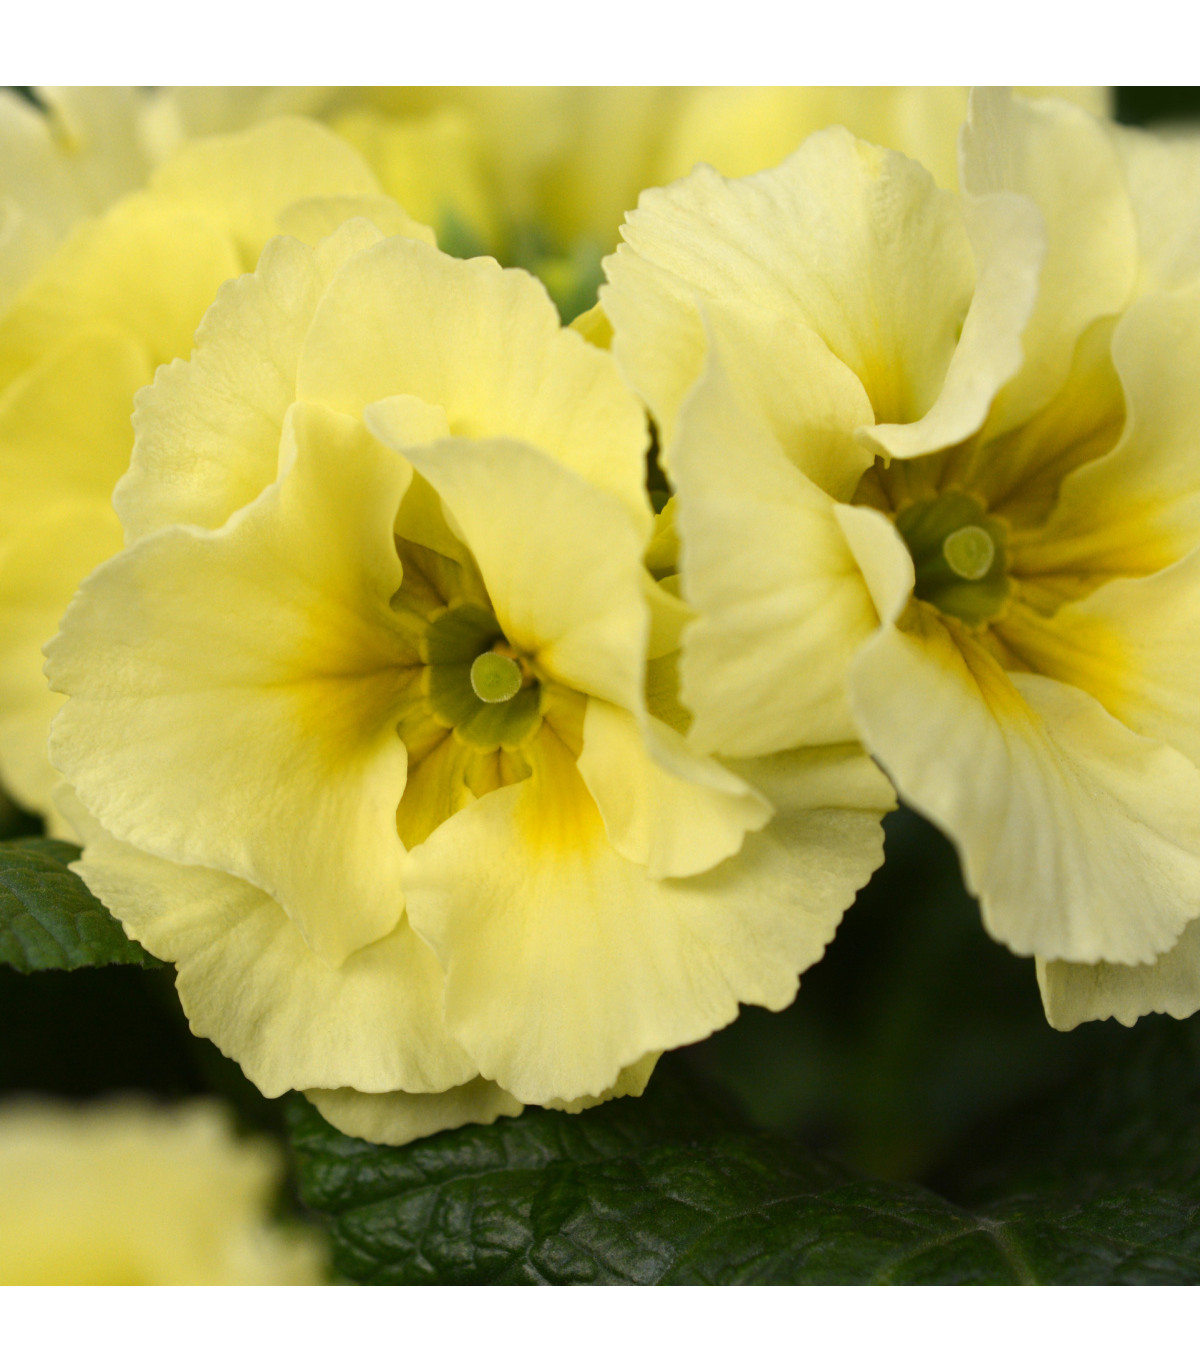 Prvosienka Inara F1 Lemon yellow - Primula elatior - semená prvosienky - 20 ks